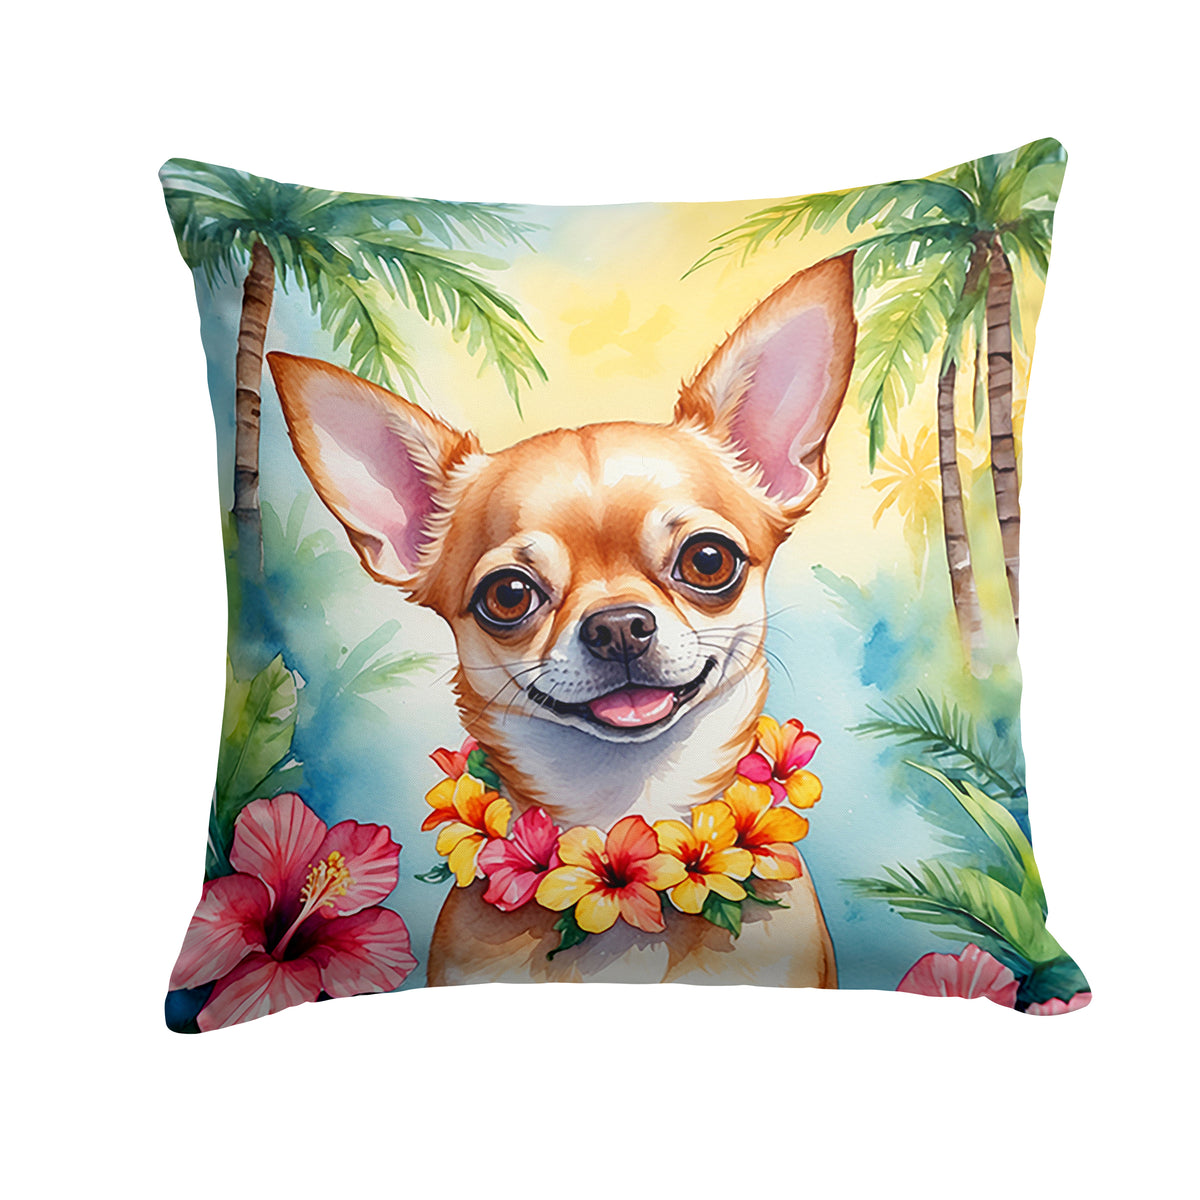 Buy this Chihuahua Luau Throw Pillow